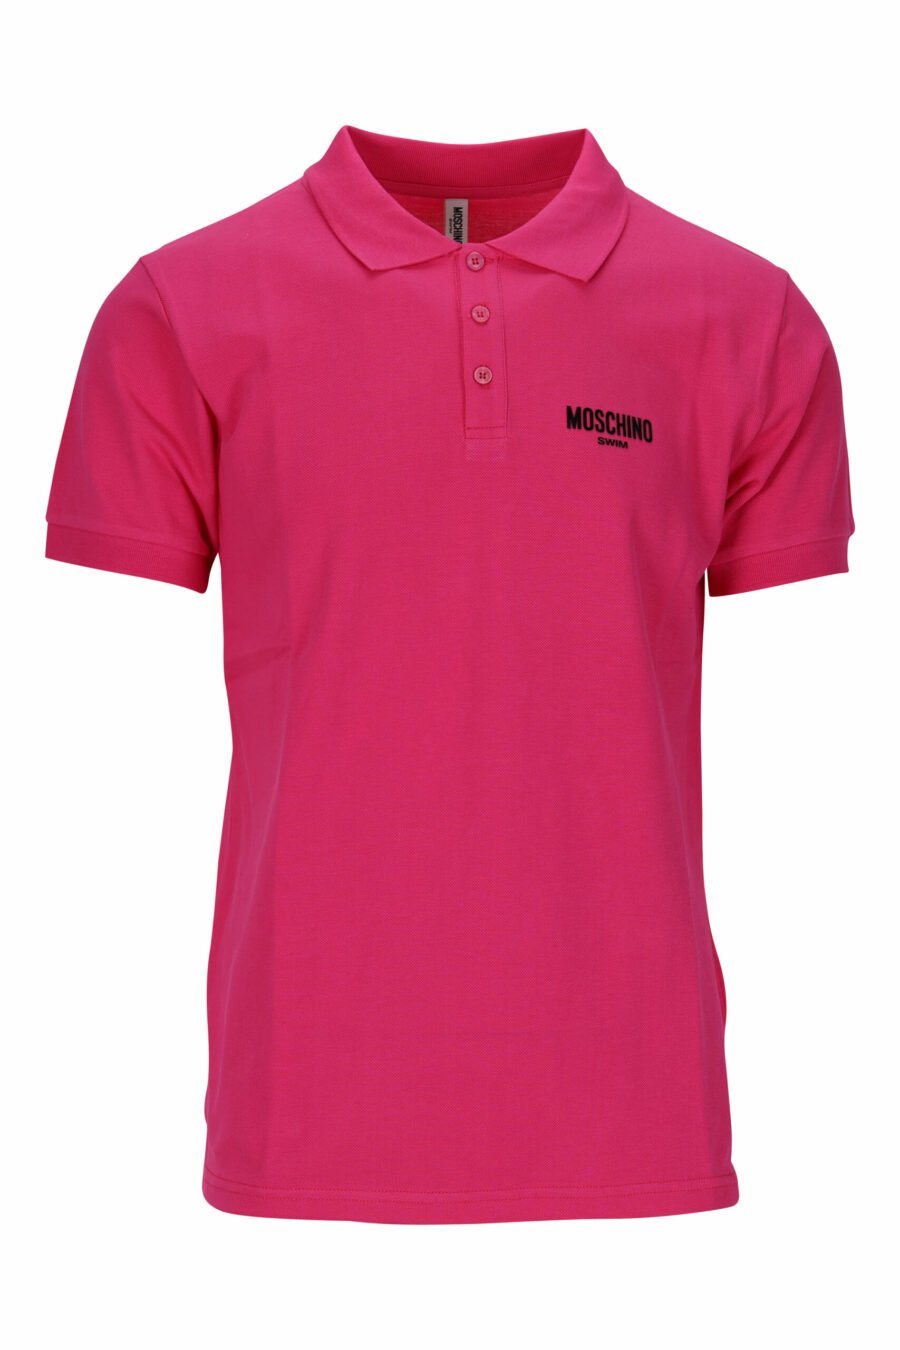 Fuchsia polo shirt with minilogue "swim" - 667113673769 scaled